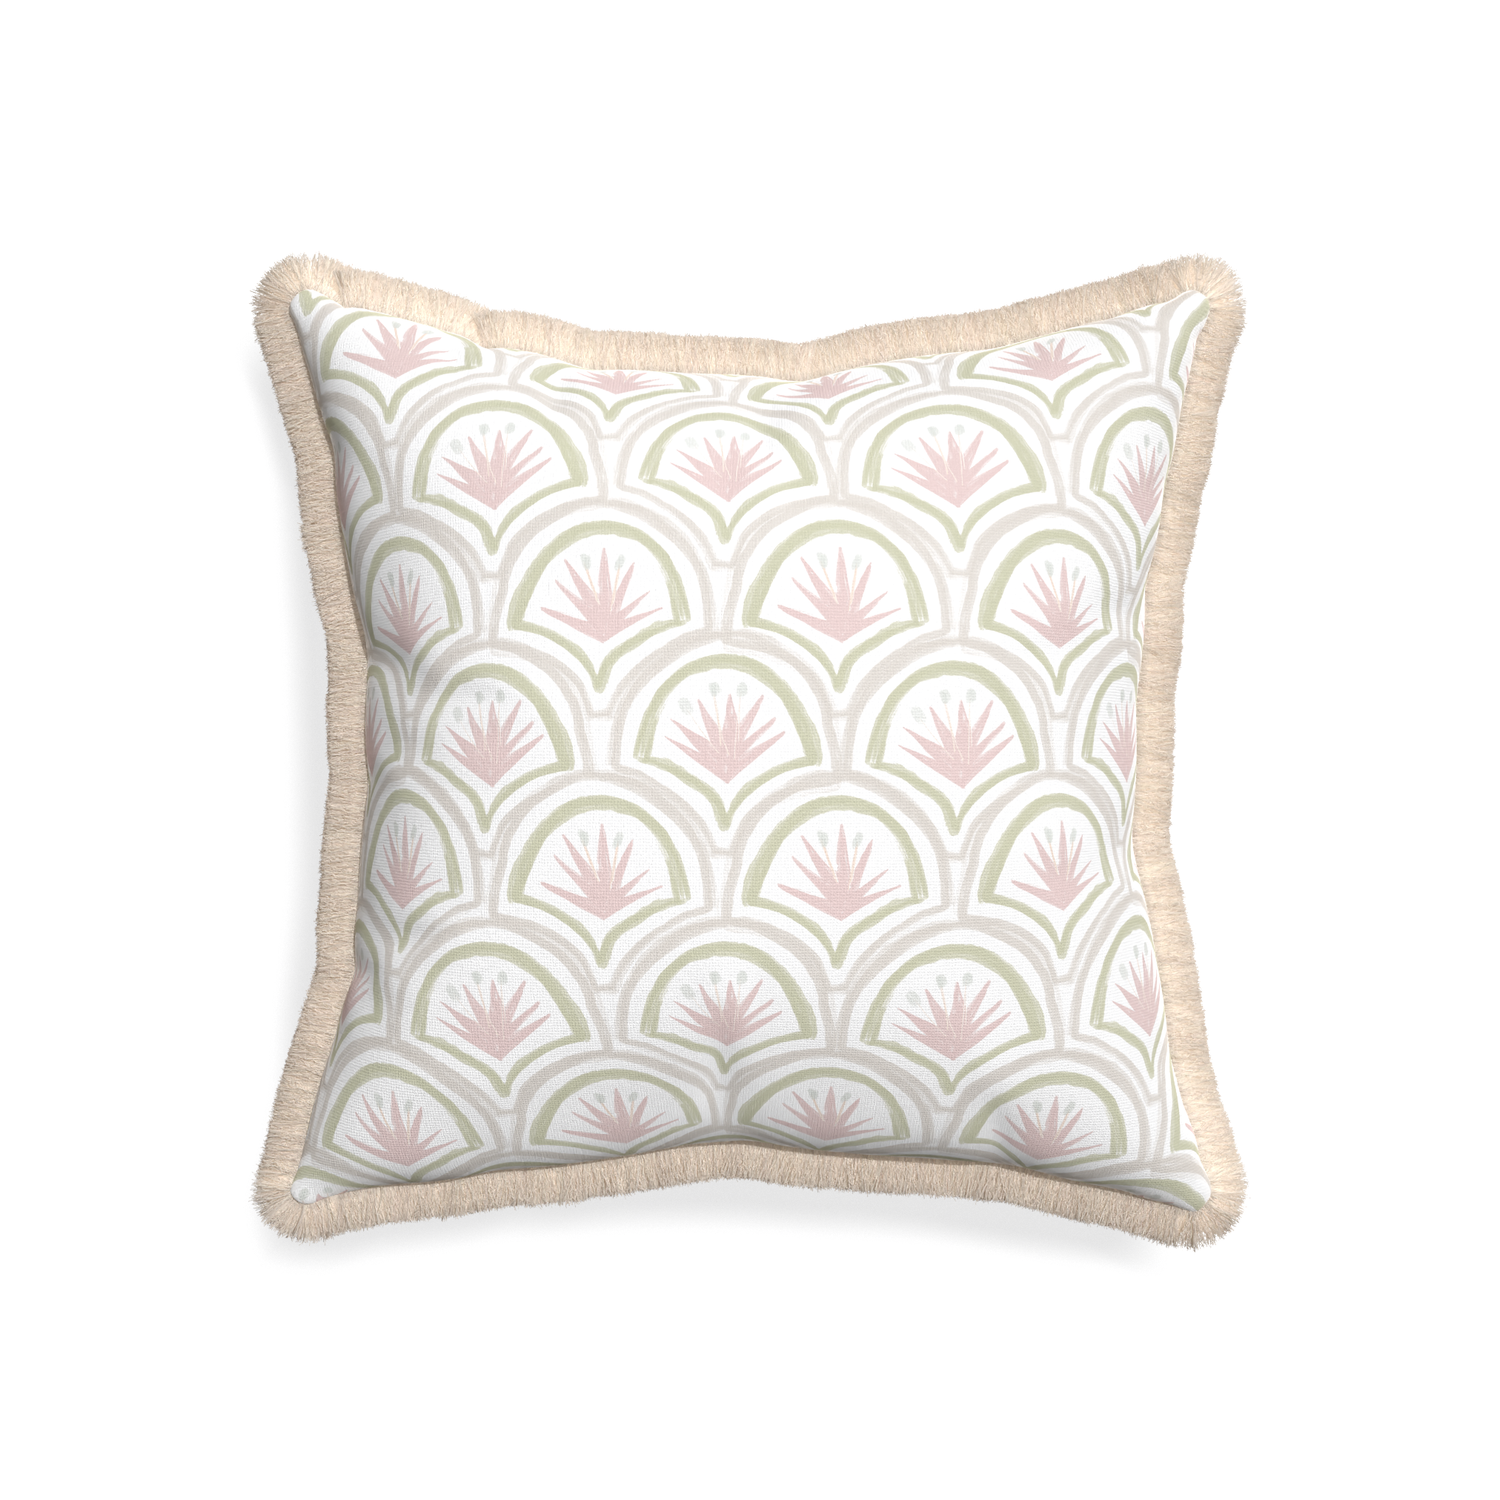 20-square thatcher rose custom pillow with cream fringe on white background